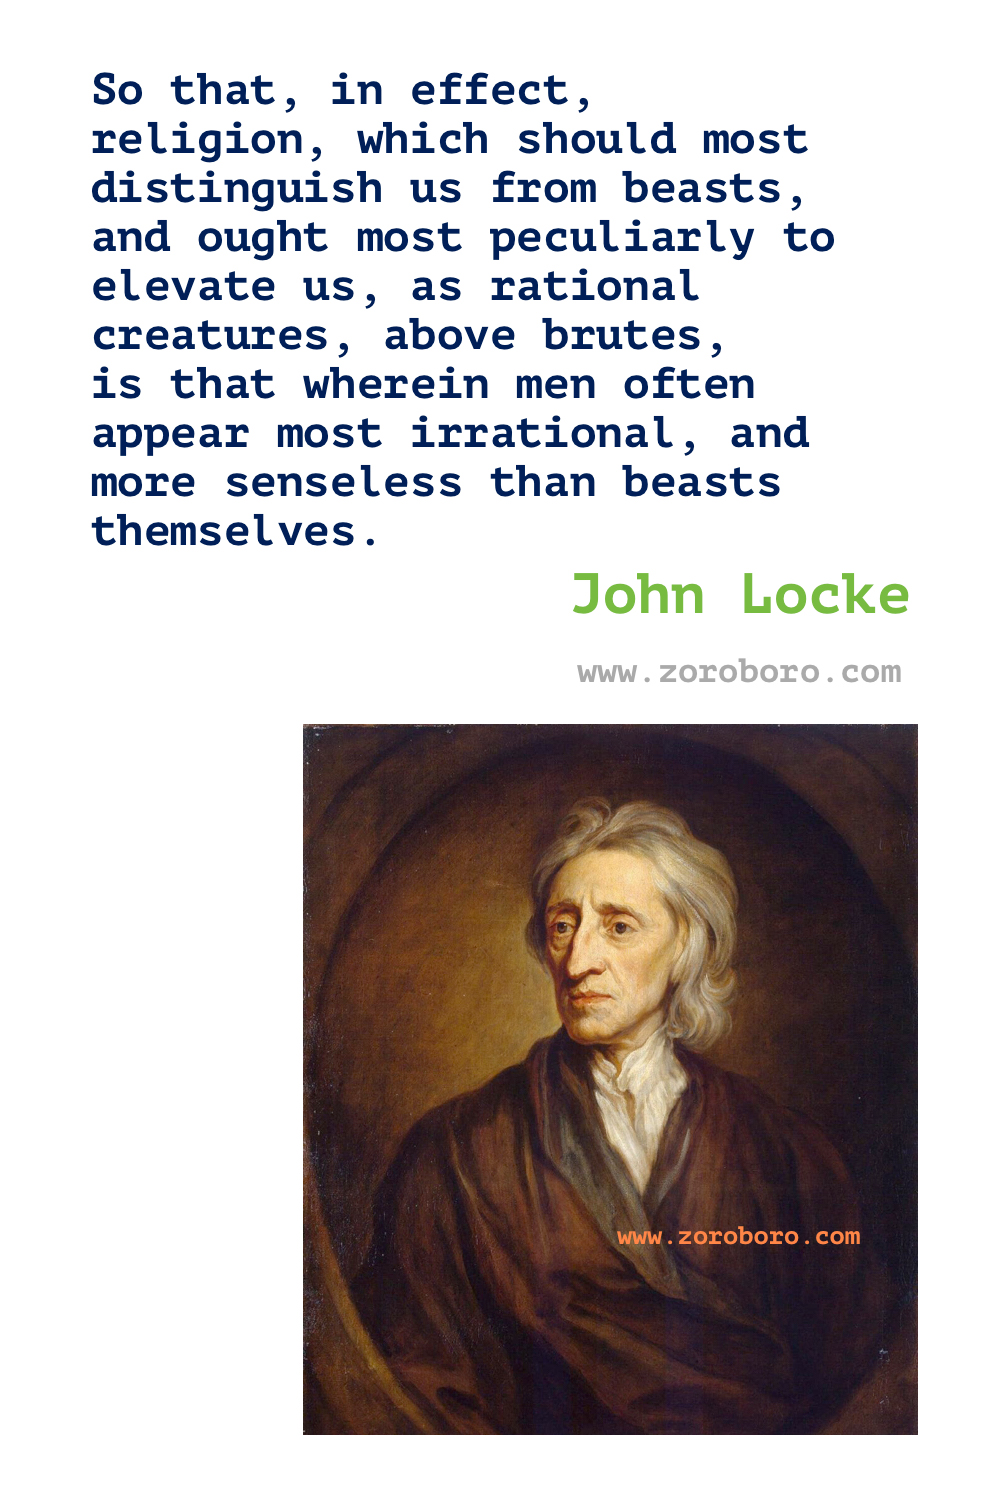 John Locke Quotes. John Locke two treatises of government Quotes. John Locke Philosophy. John Locke Books Quotes